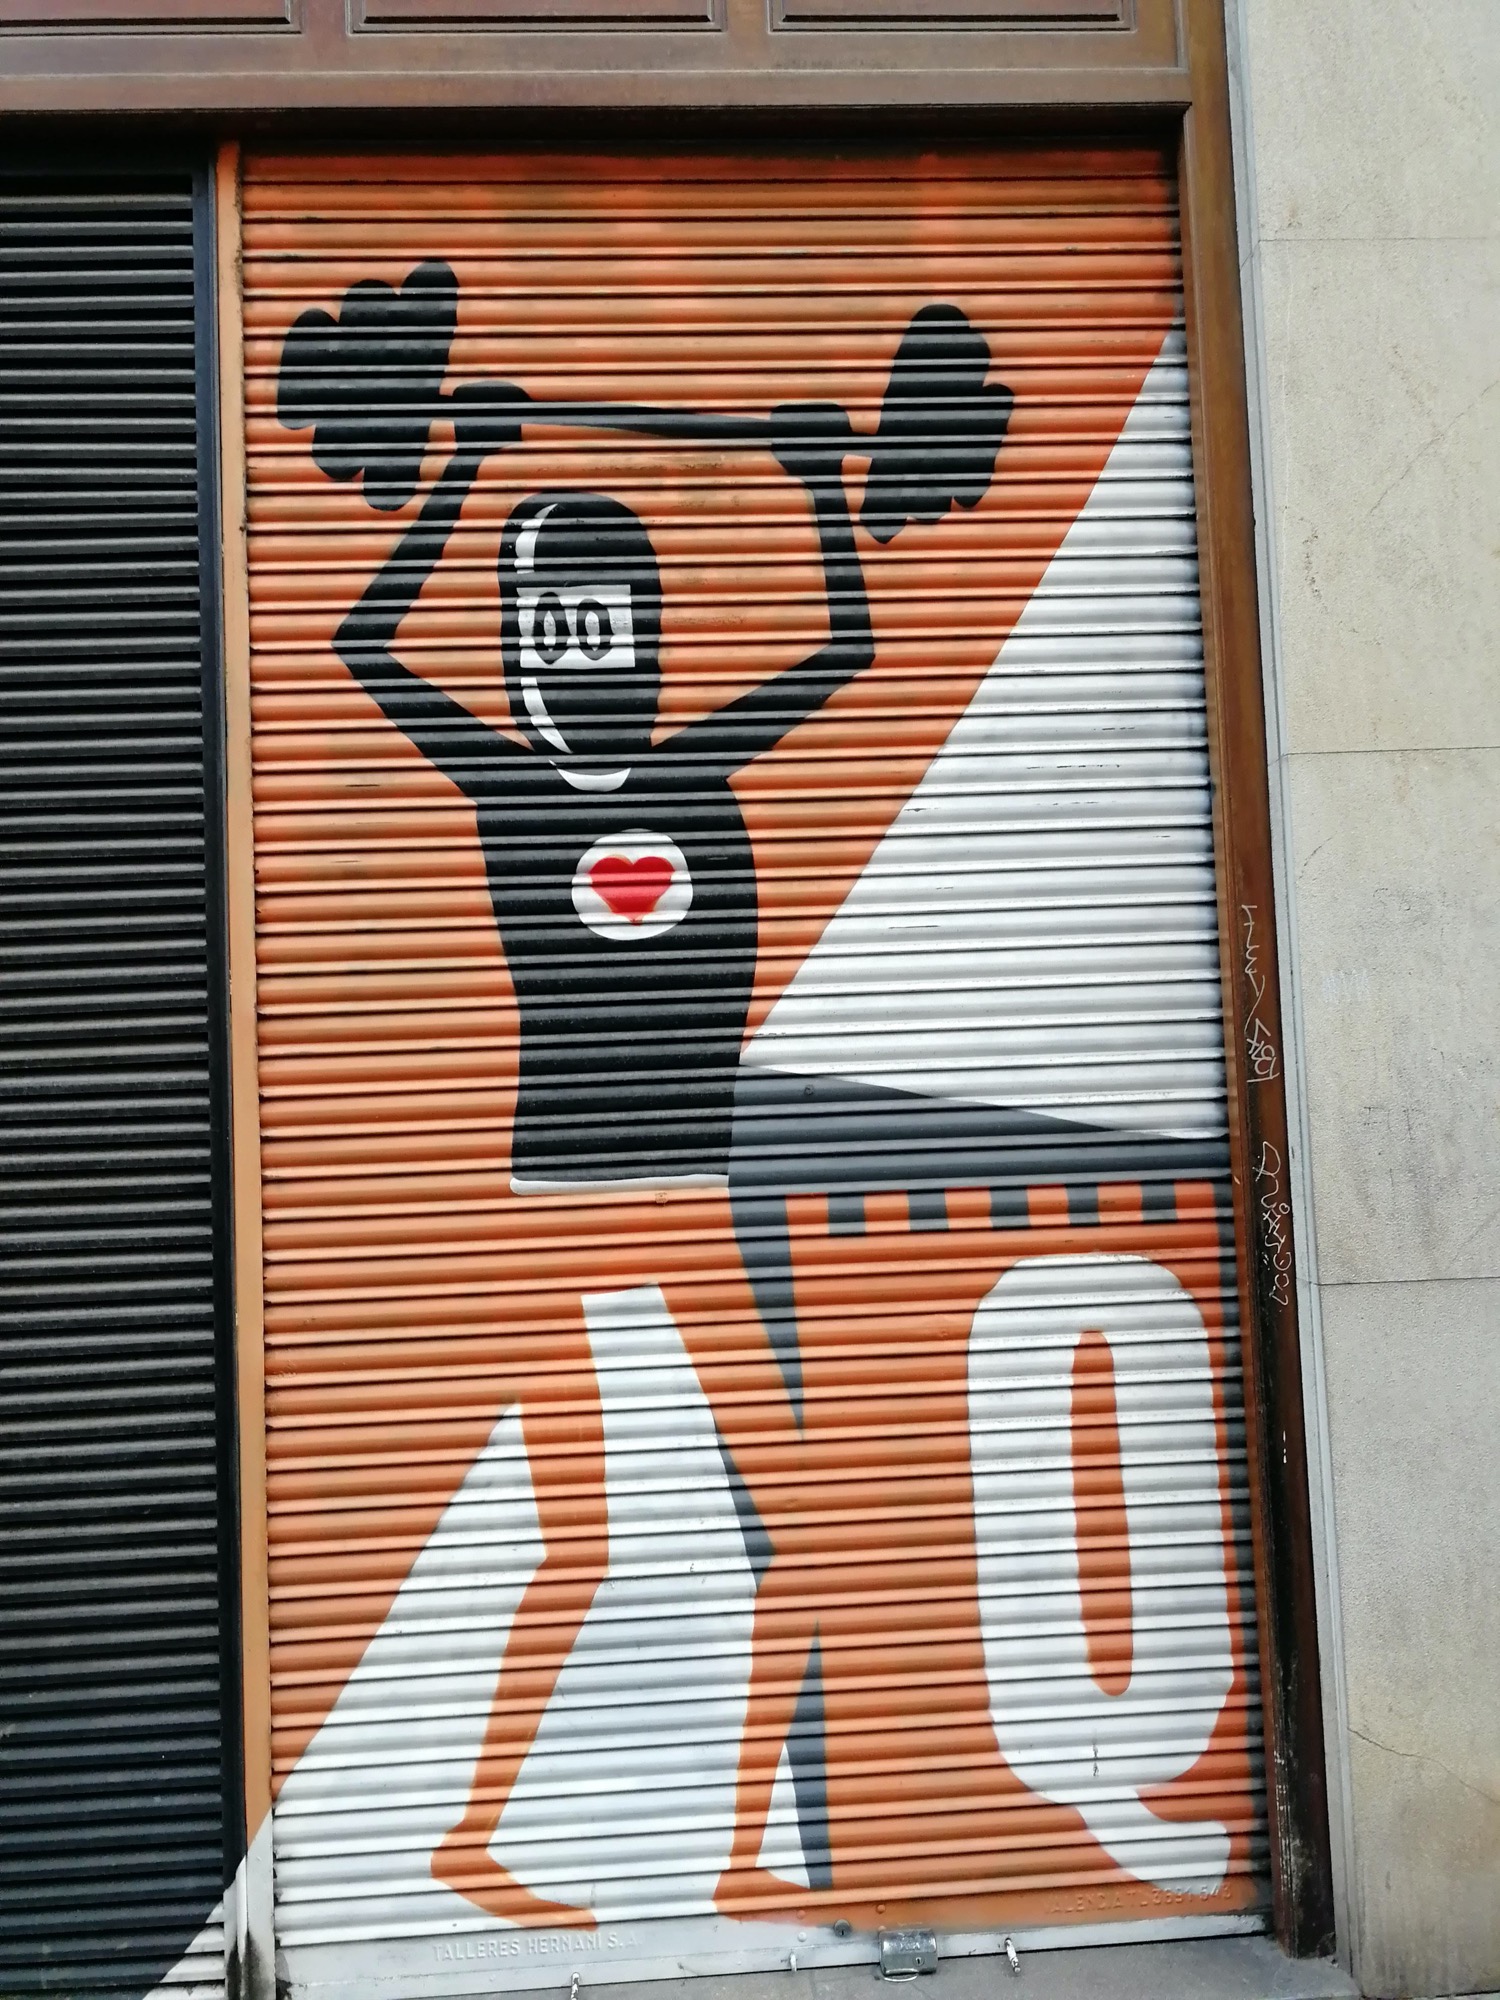 Graffiti 3293  by the artist David de Limon captured by Rabot in València Spain